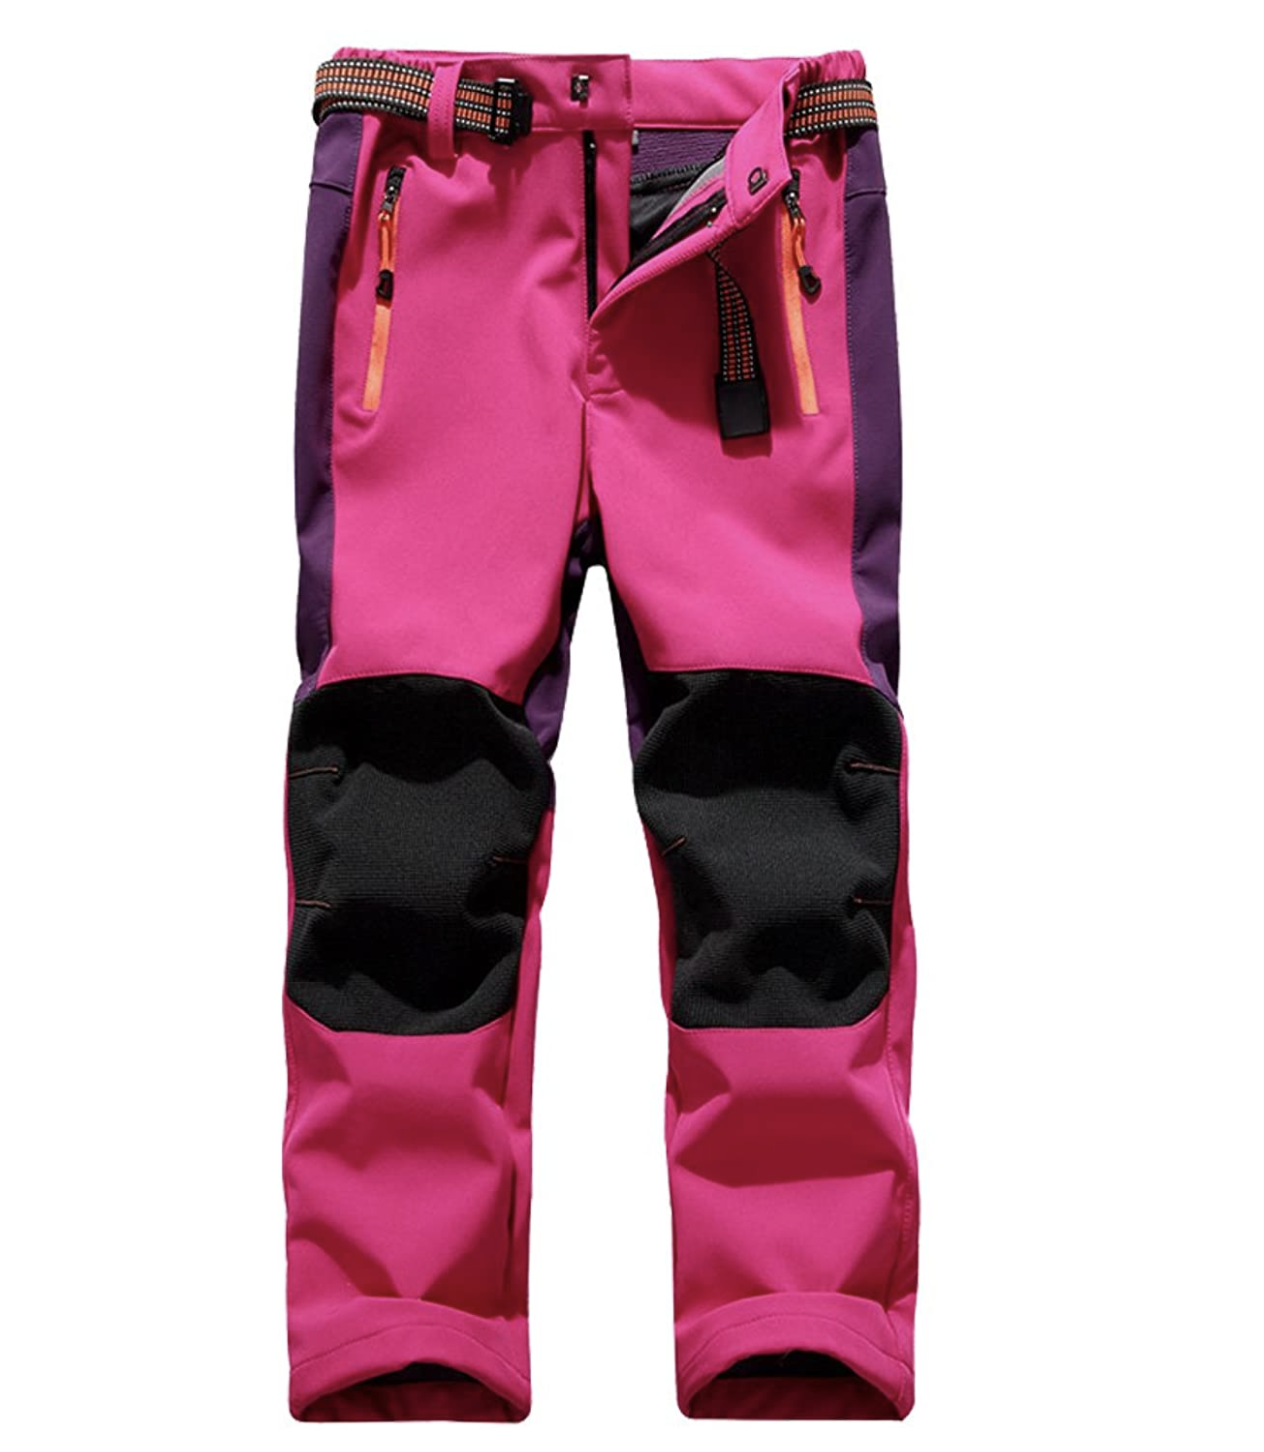 Columbia 1416 Size Ski Pant Unisex Kids Outerwear for sale  eBay